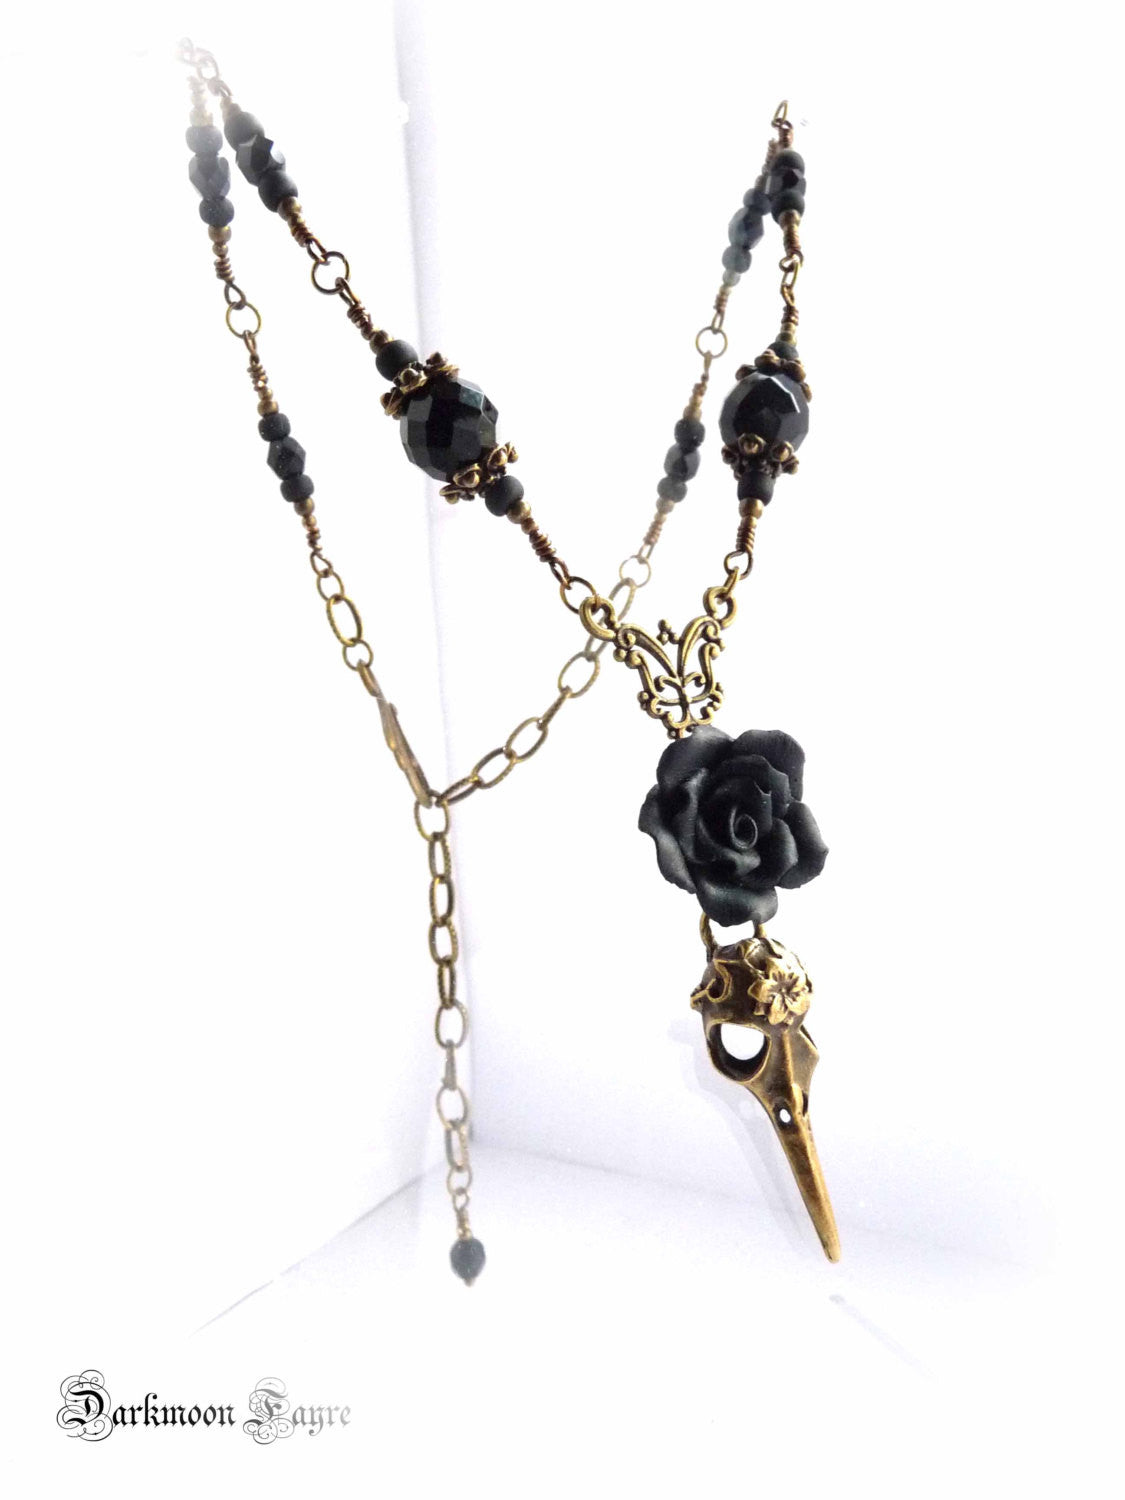 ***Black Rose & Tattooed Bronze Bird Skull Rosary Necklace/ Choker. Jet Black Faceted Vintage, Fire Polished and Matte Black Glass Beads - Darkmoon Fayre